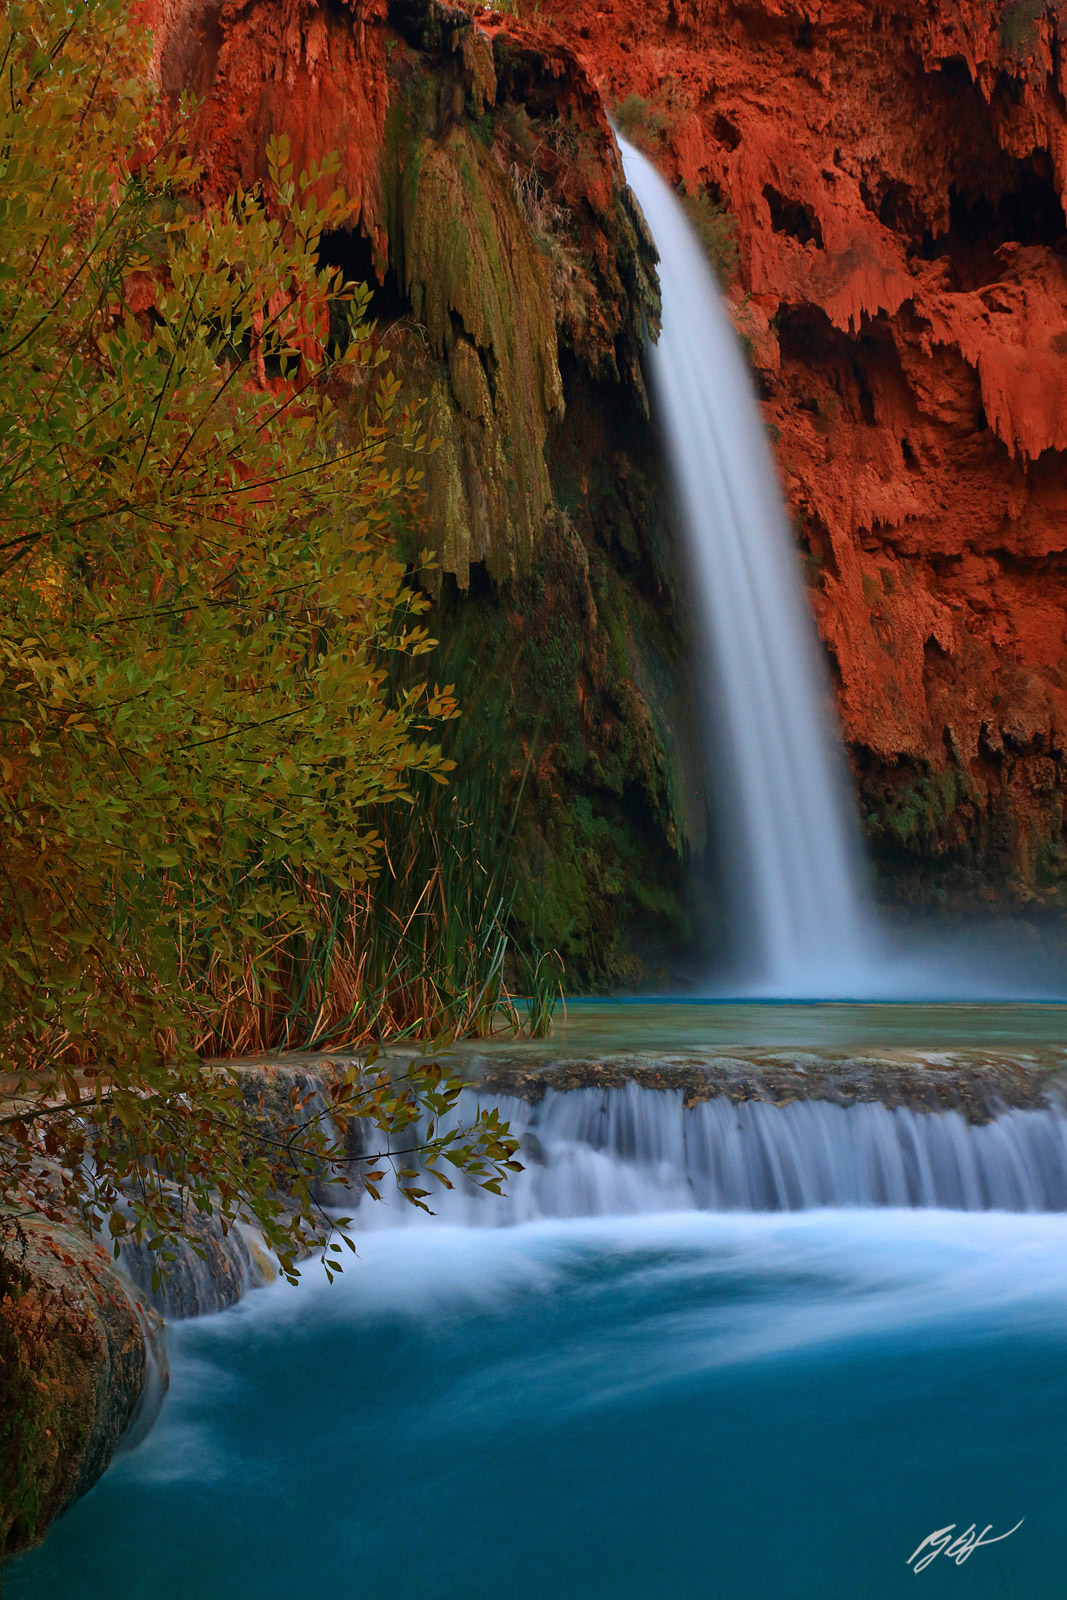 Havasu Falls in Havasu Canyon, on the Havasupai Indian Reservation in Arizona